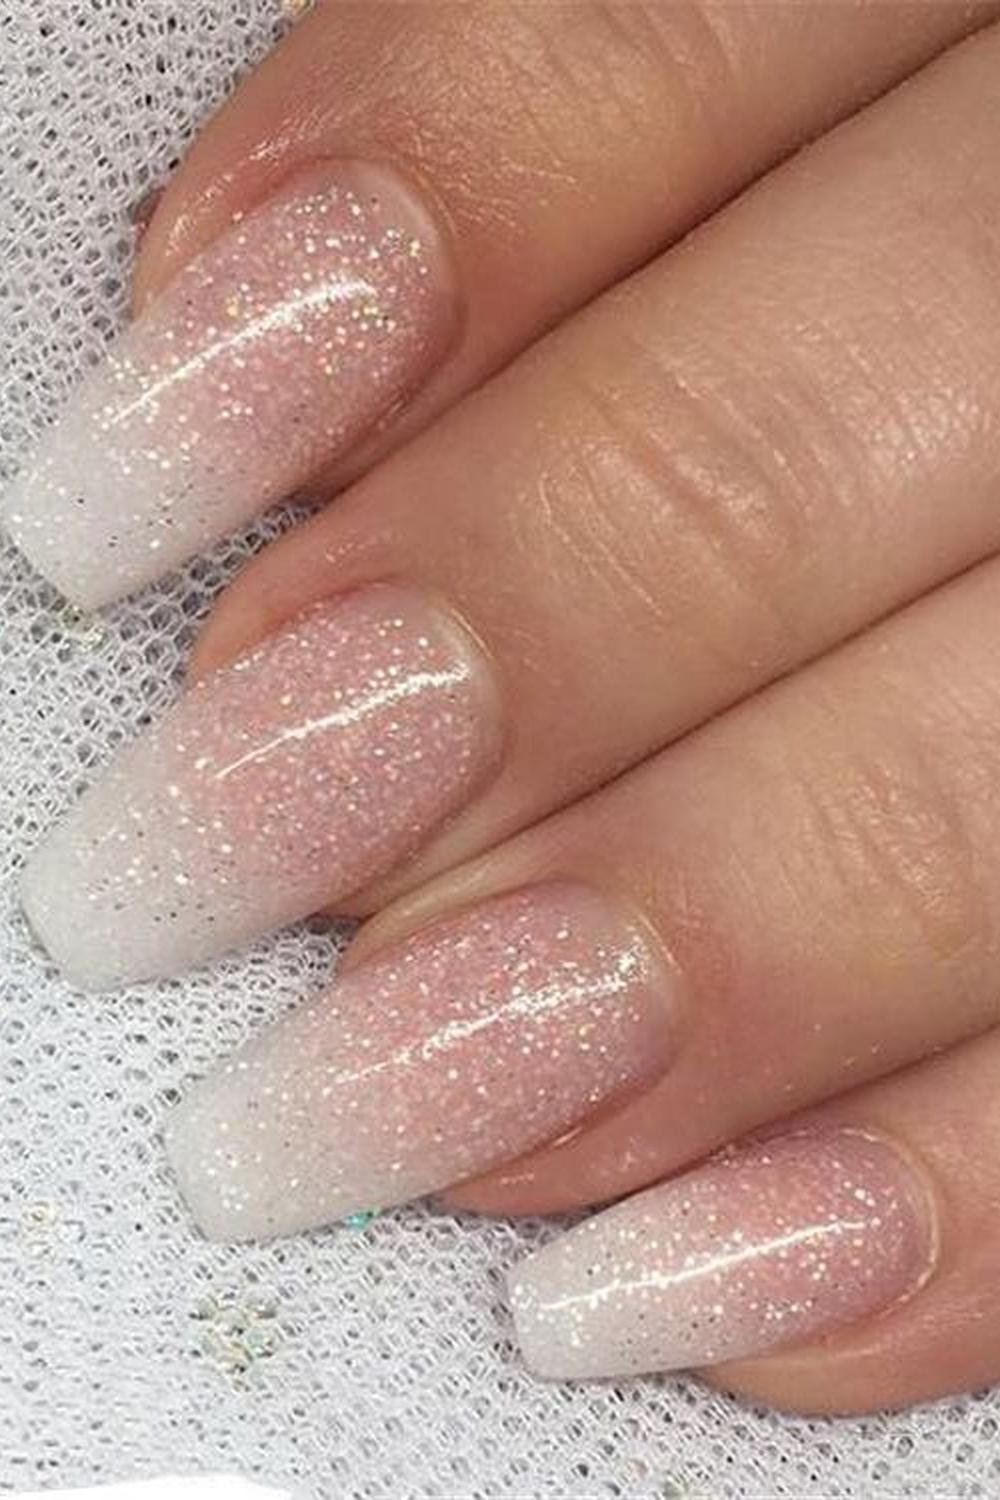 16 - Picture of White Glitter Nails